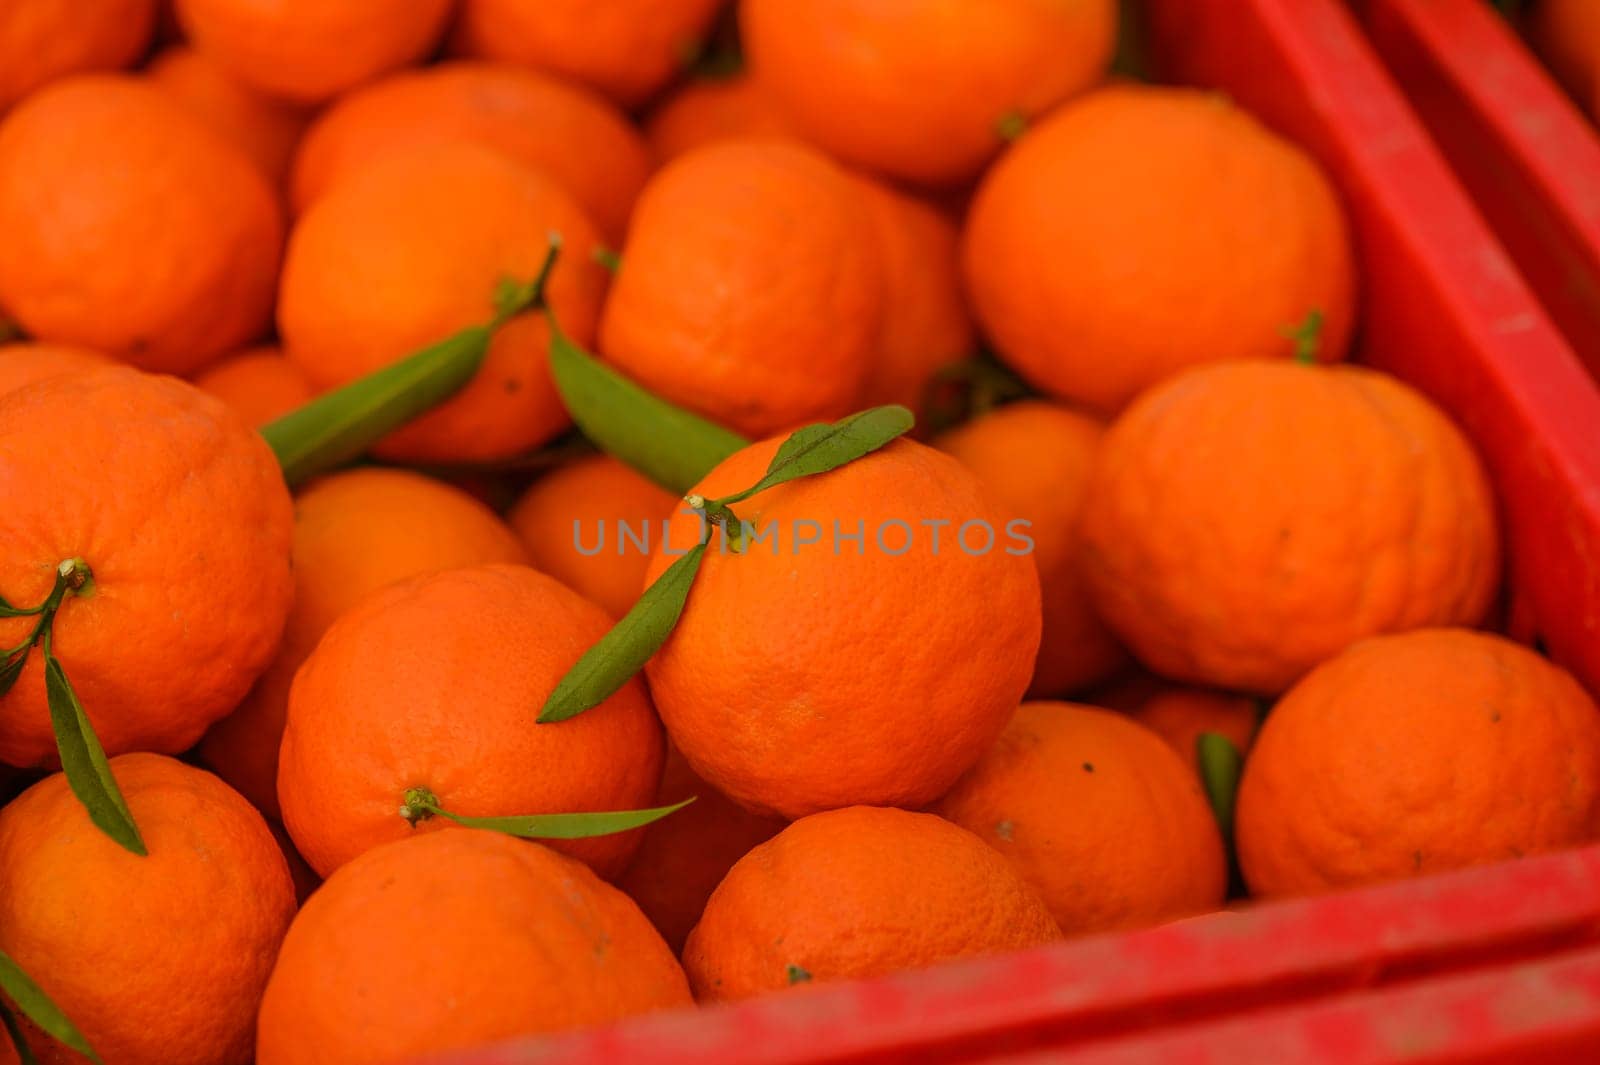 juicy fresh tangerines in boxes for sale in Cyprus in winter 21